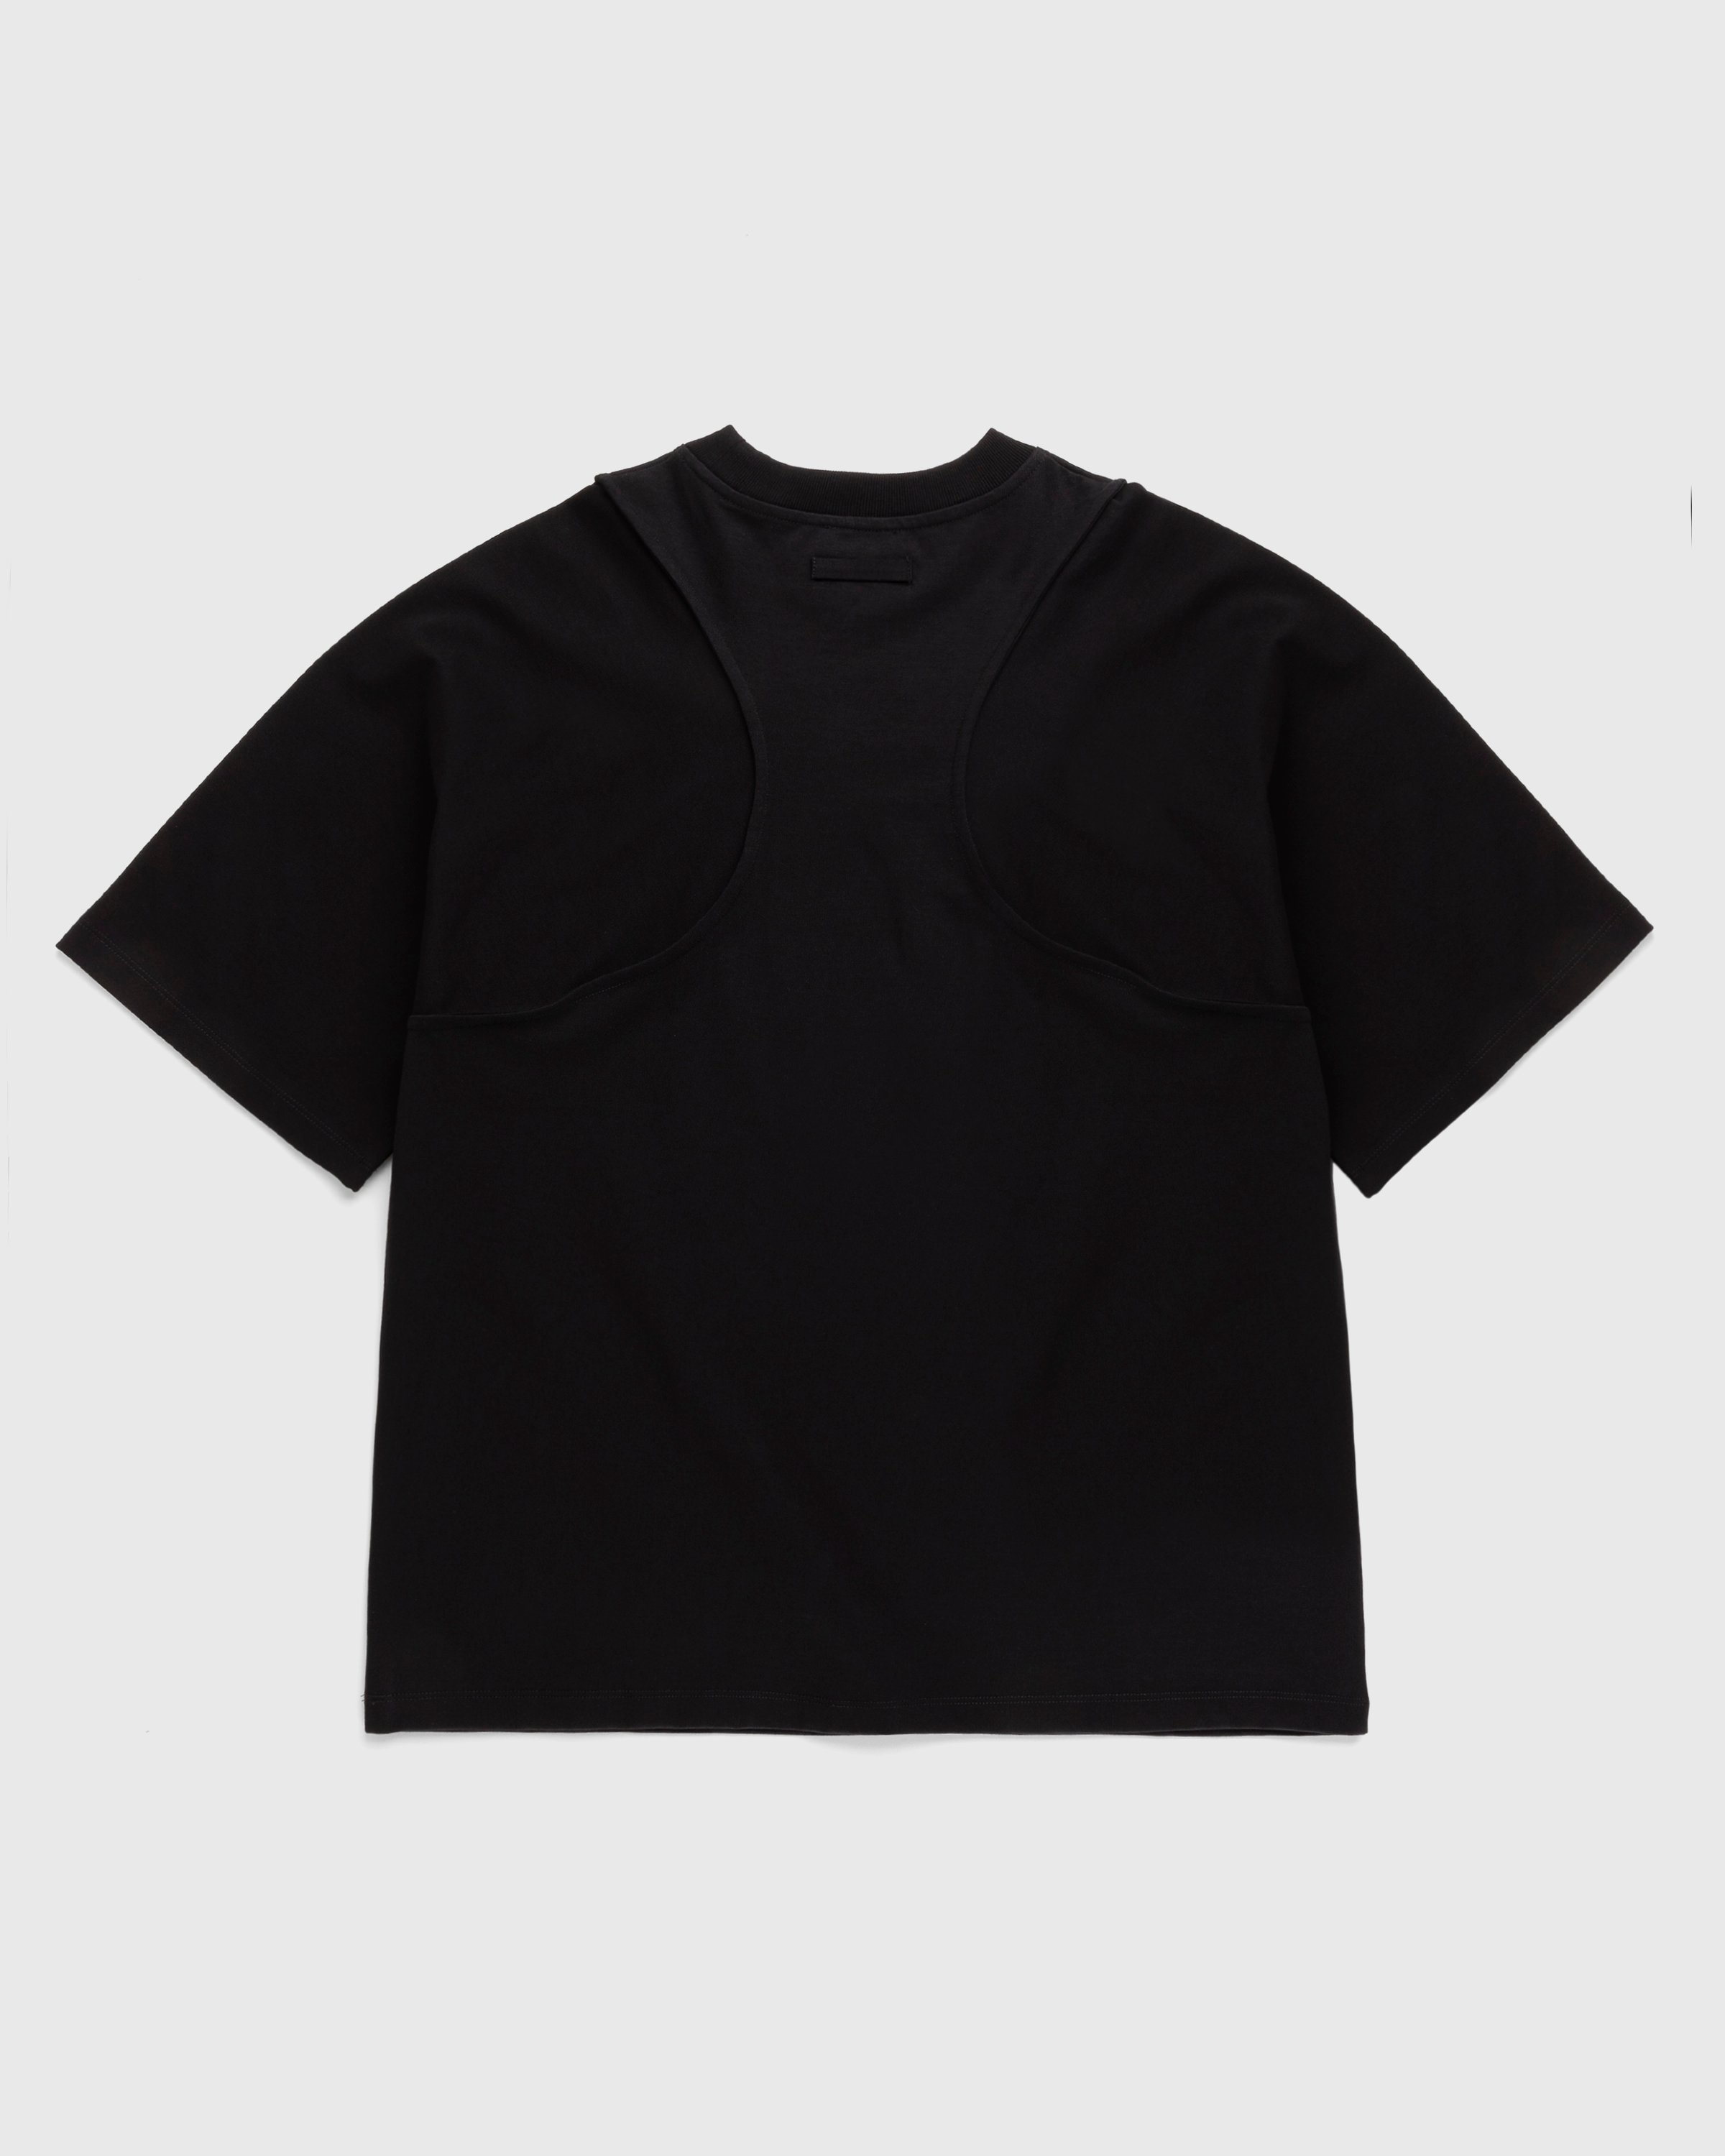 Jean Paul Gaultier - JPG T-Shirt Black - Clothing - Black - Image 2